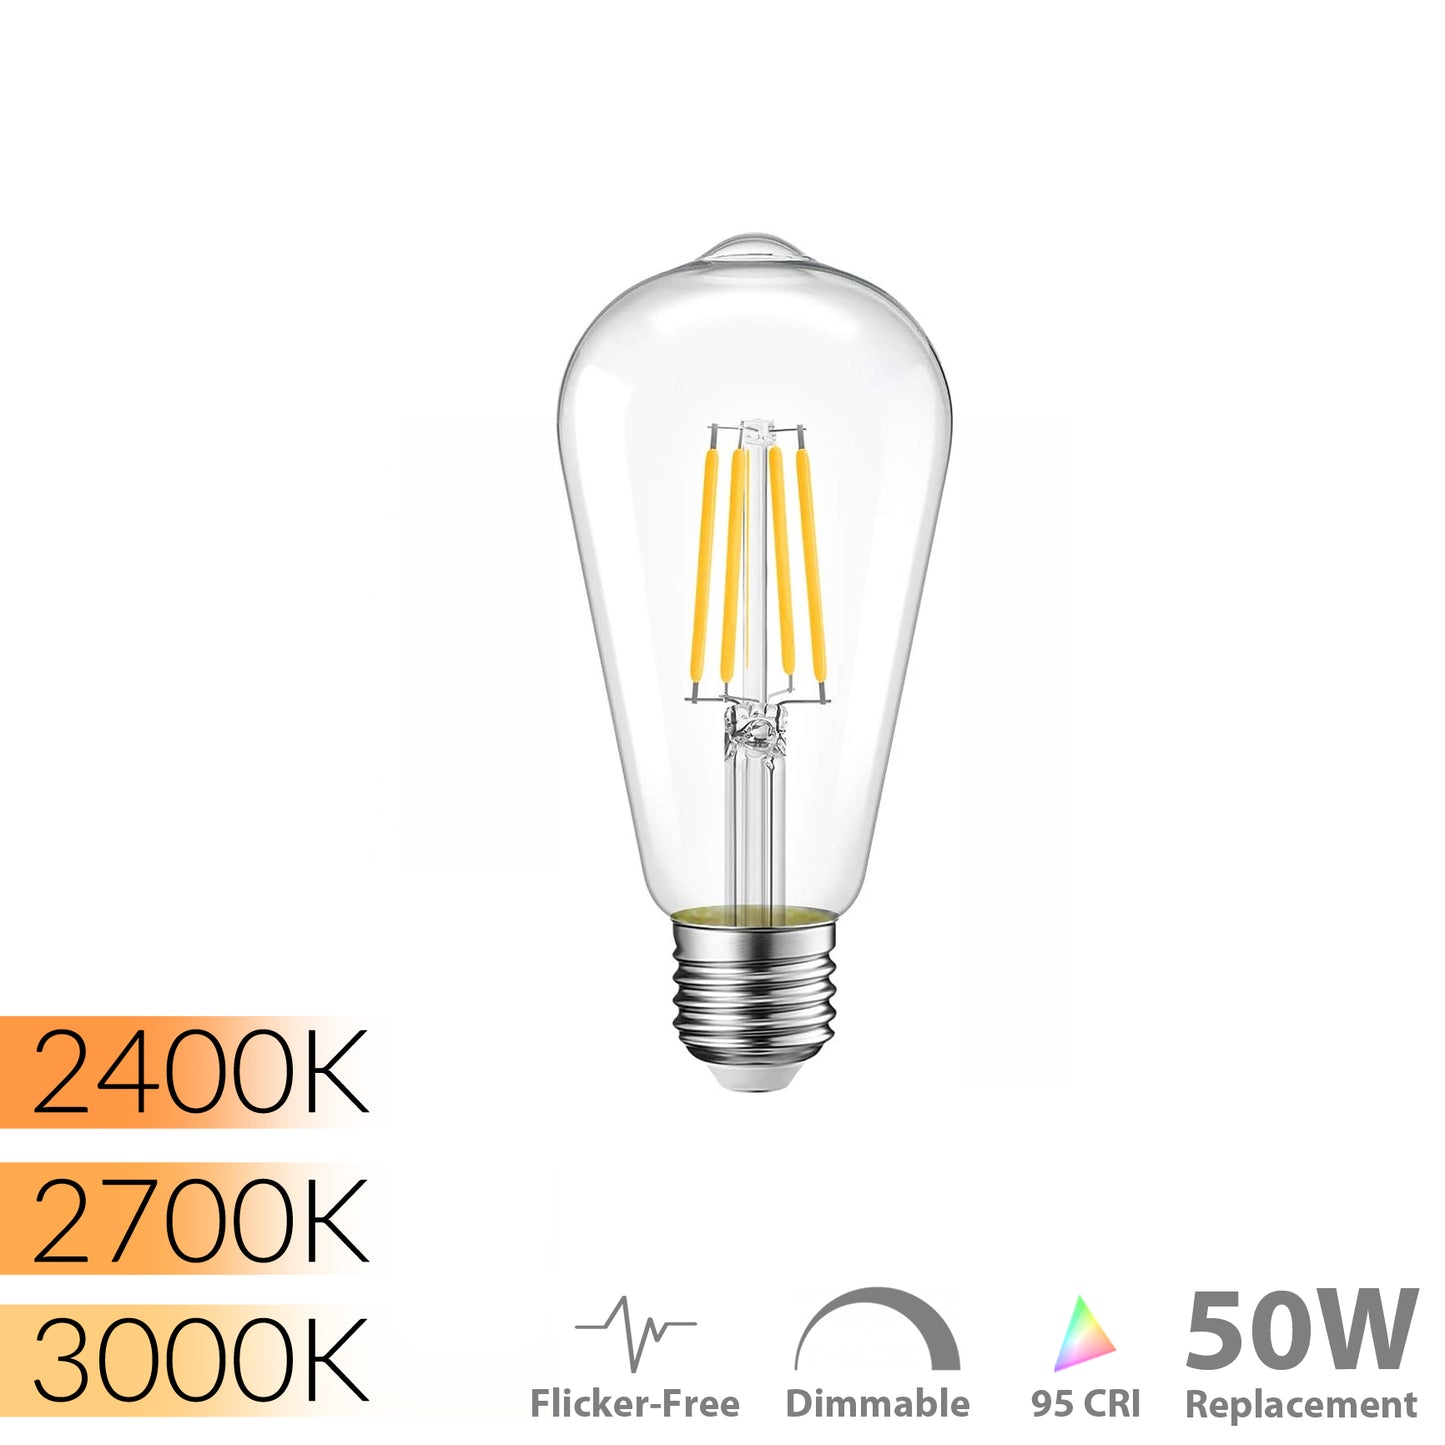 ModernVintage™ 95 CRI ST21 LED Filament Bulb for Home & Residential